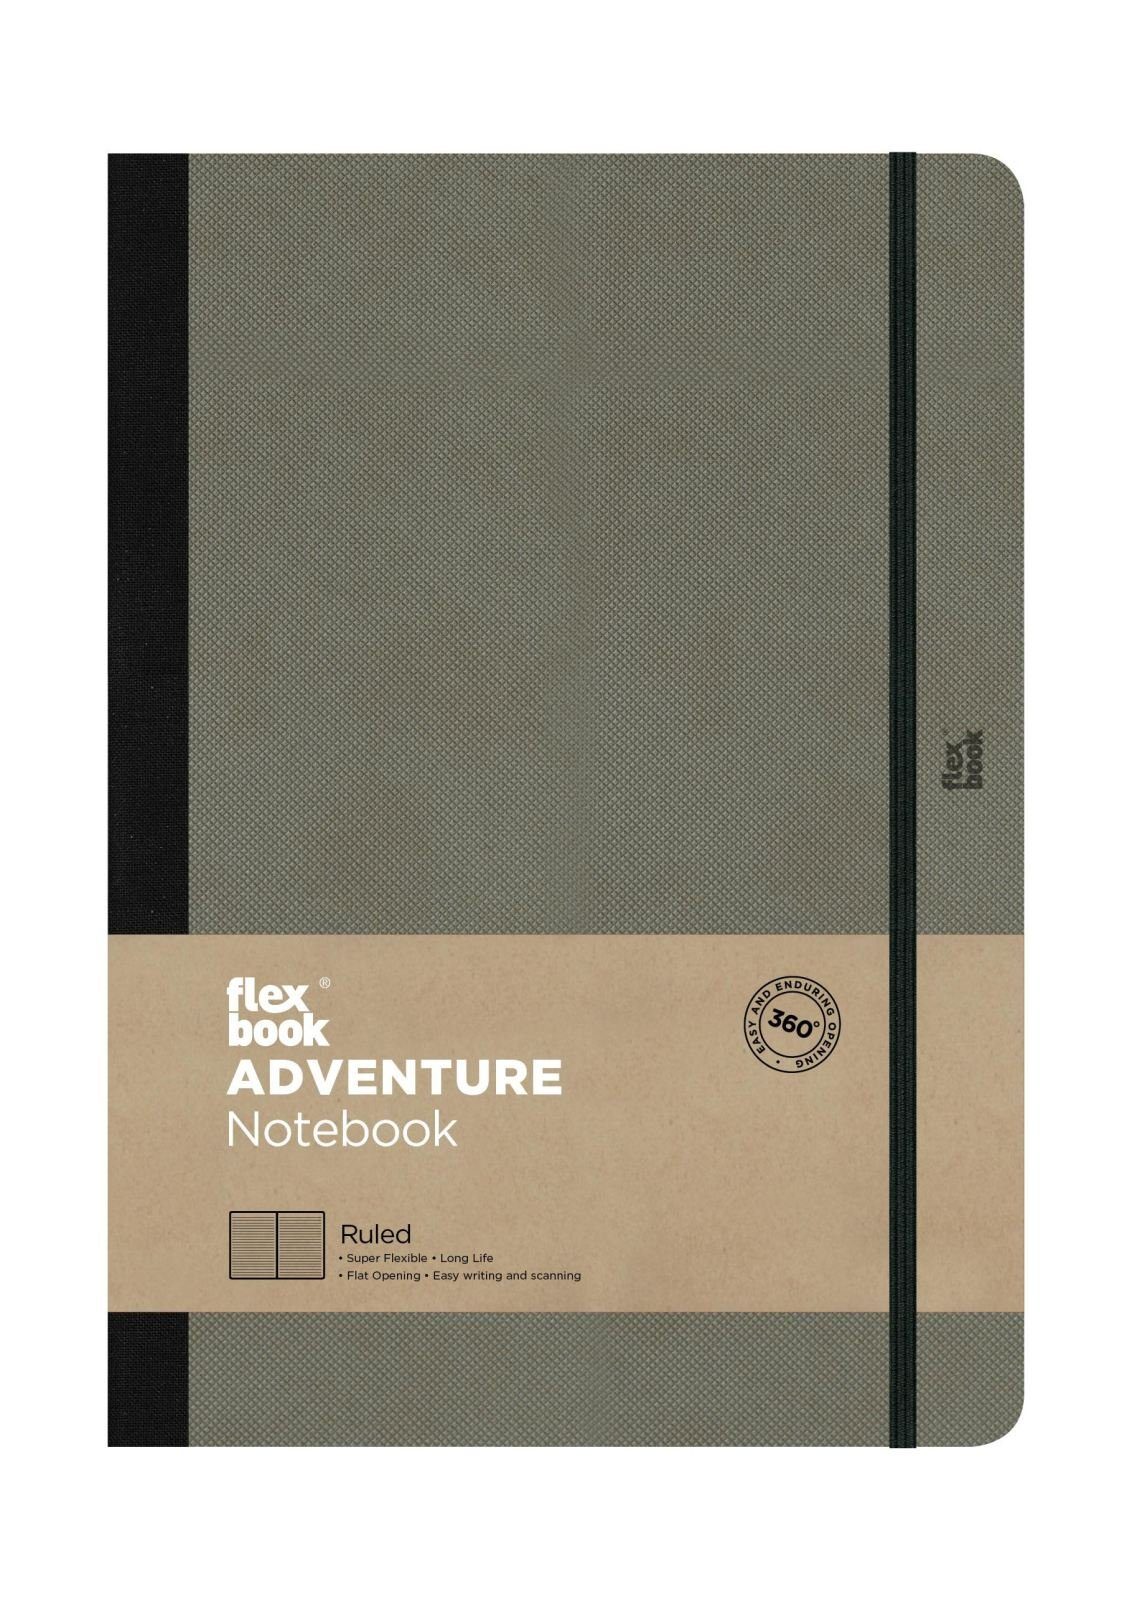 Gummizug Flexbook 17*24 Farben, Adventure liniert Kunstleder Flexbook 5 3 Elephant Notizbuch Notizbuch cm